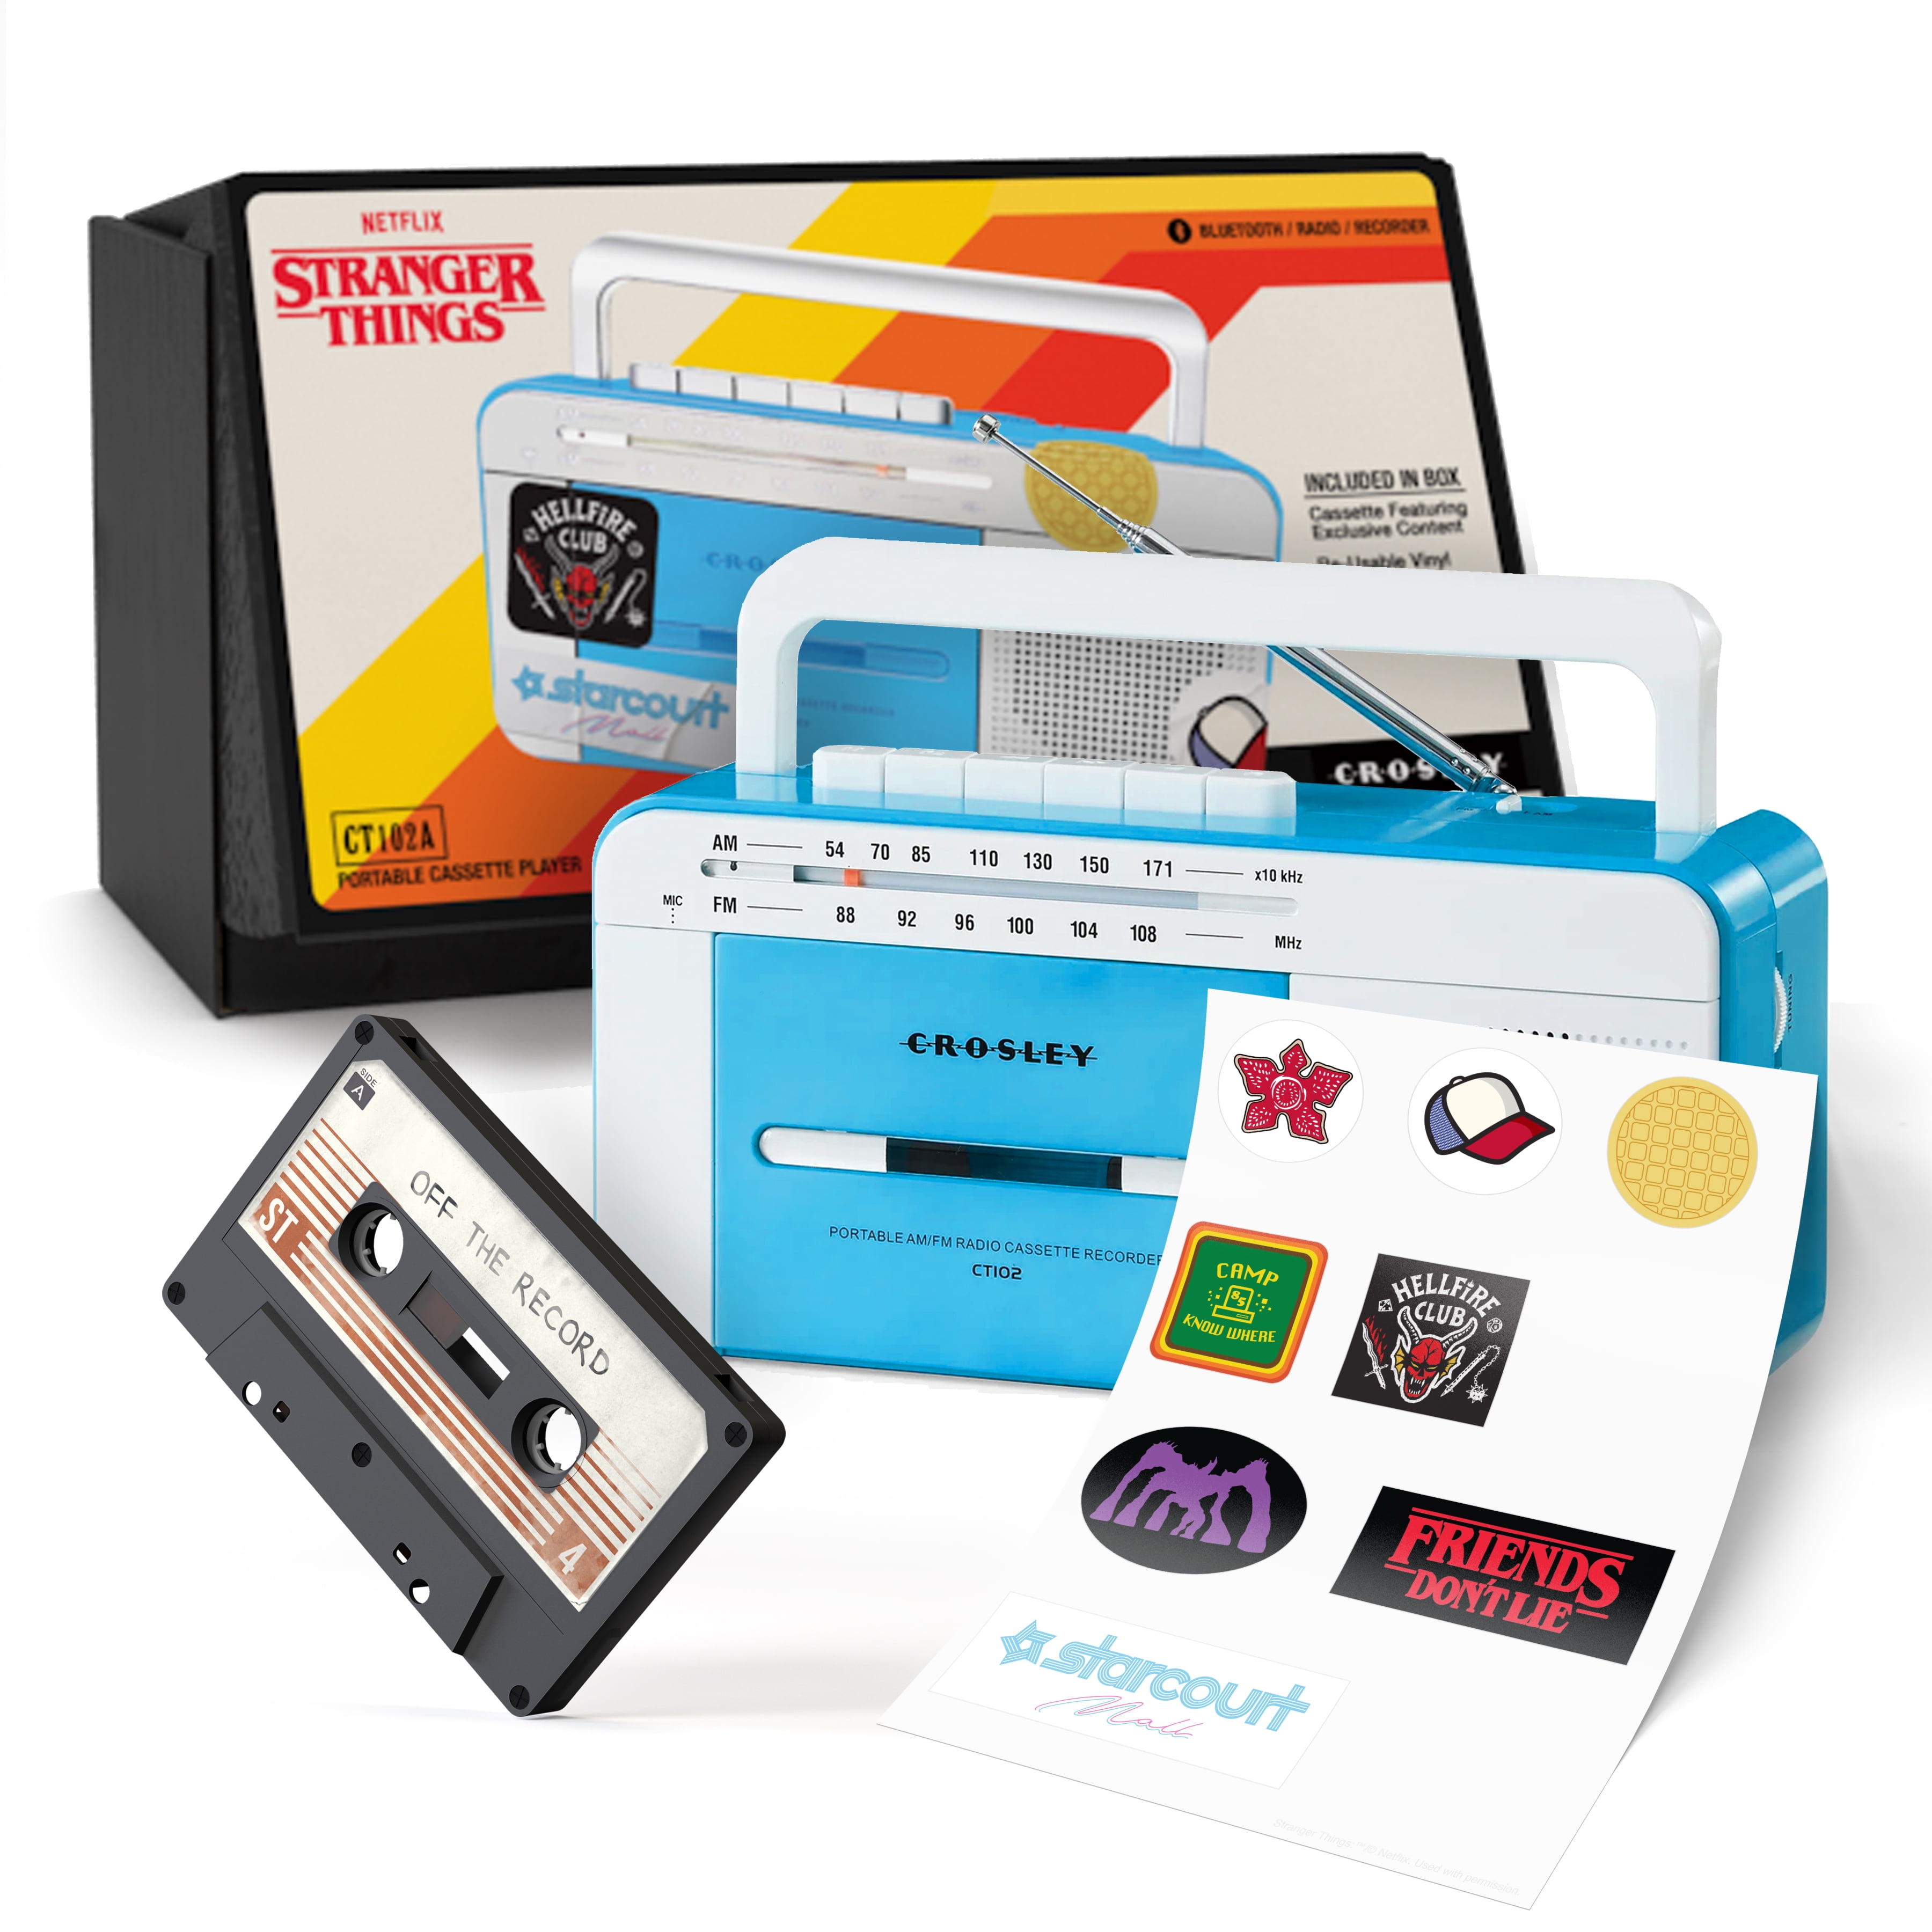 Walmart Exclusive Stranger Things Crosley Cassette Player Bundle - Includes  Crosley Cassette Player and Season 4 Sneak Peak 